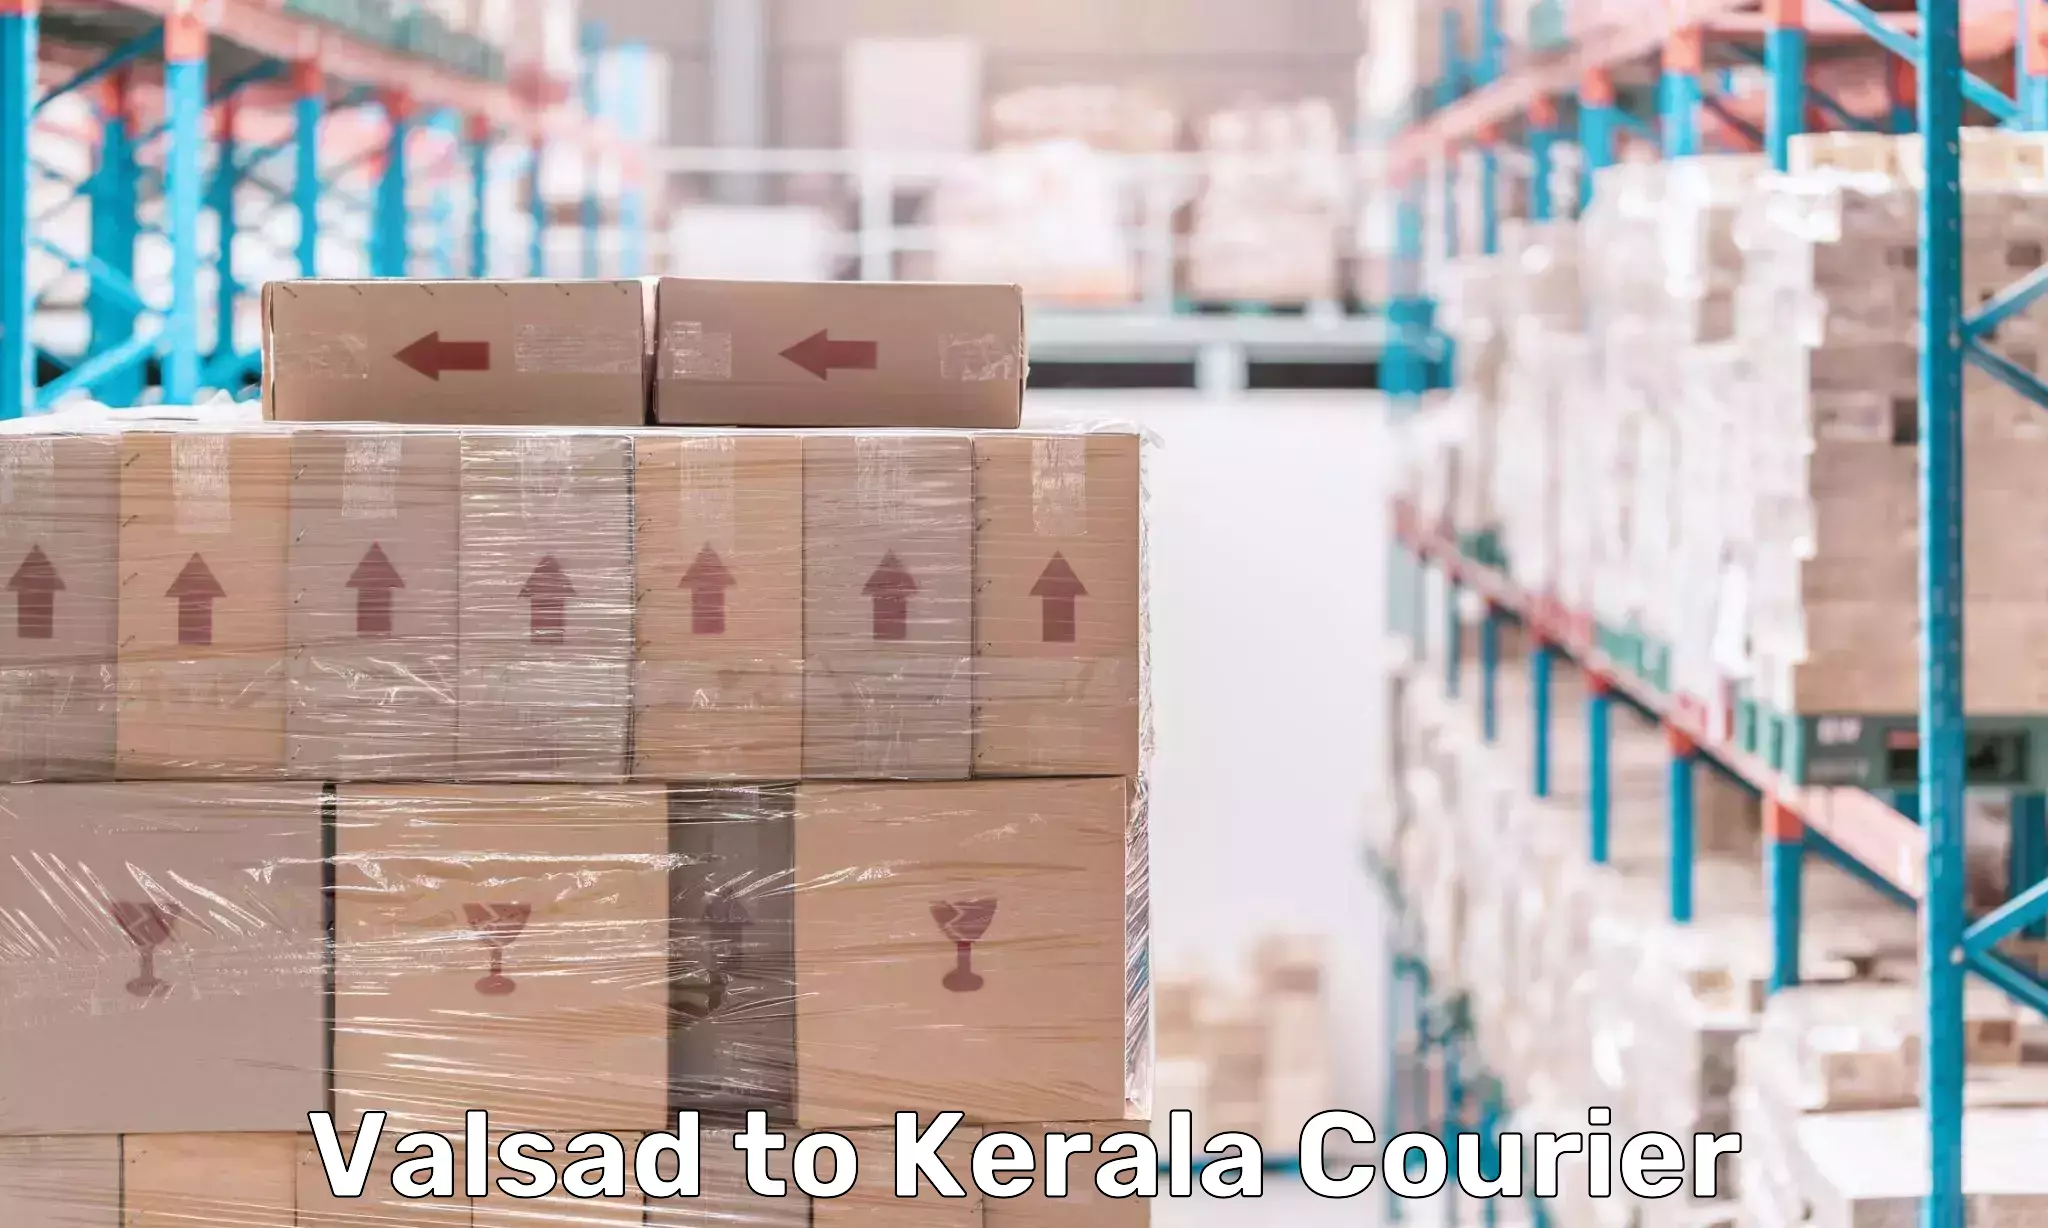 Express logistics providers Valsad to Kerala